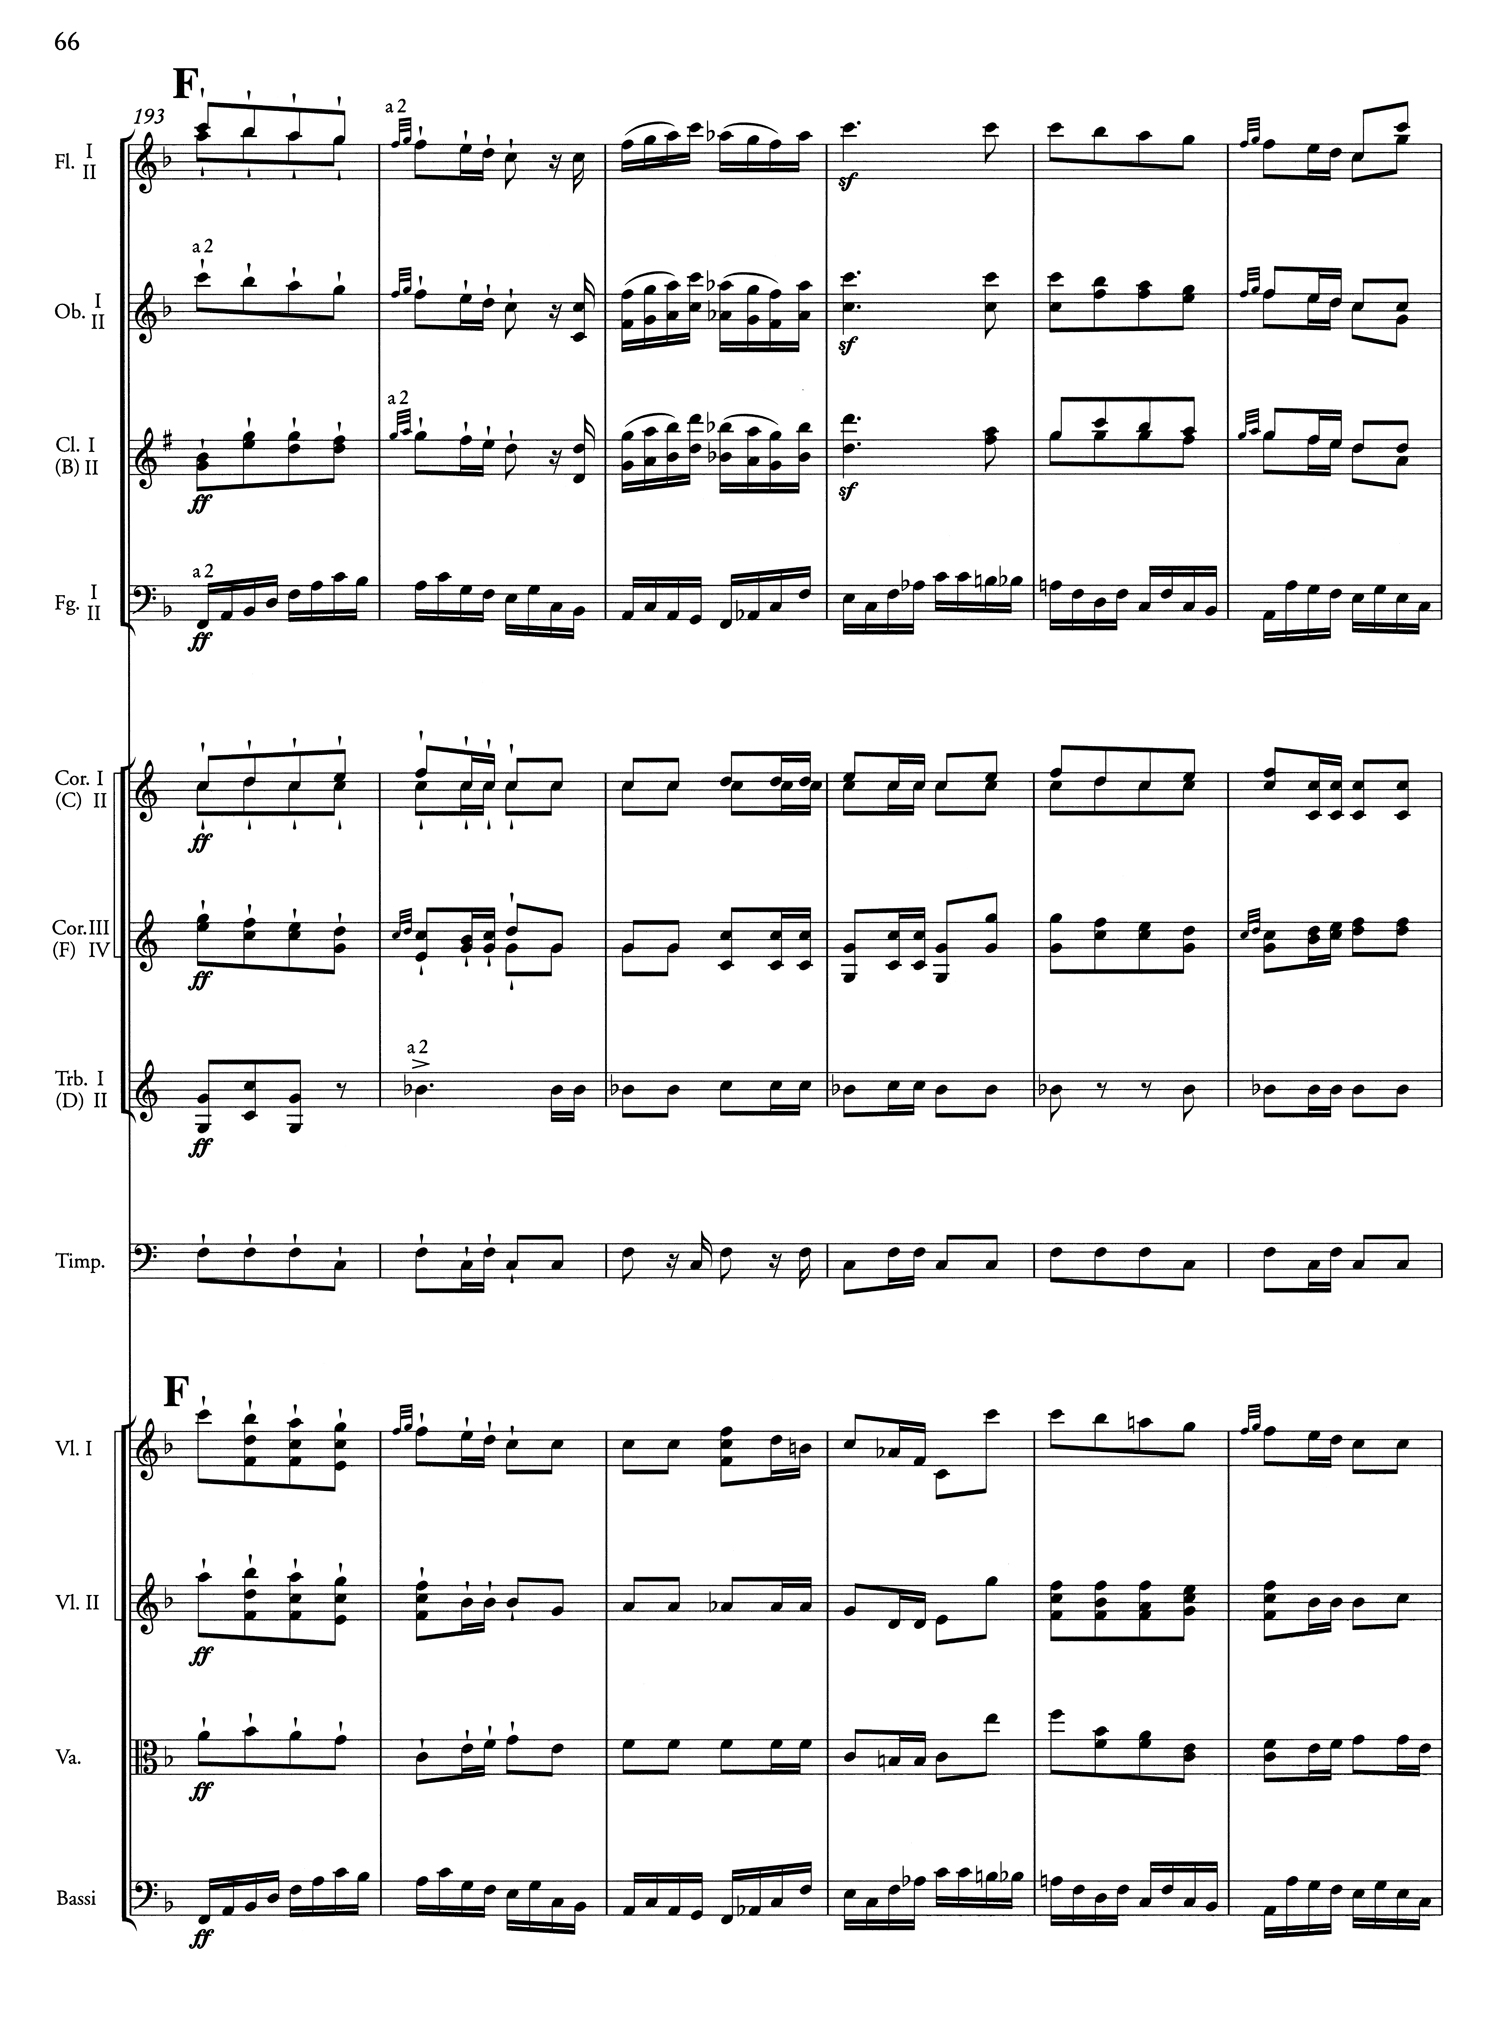 Mendelssohn Score 2 Page 2.jpg